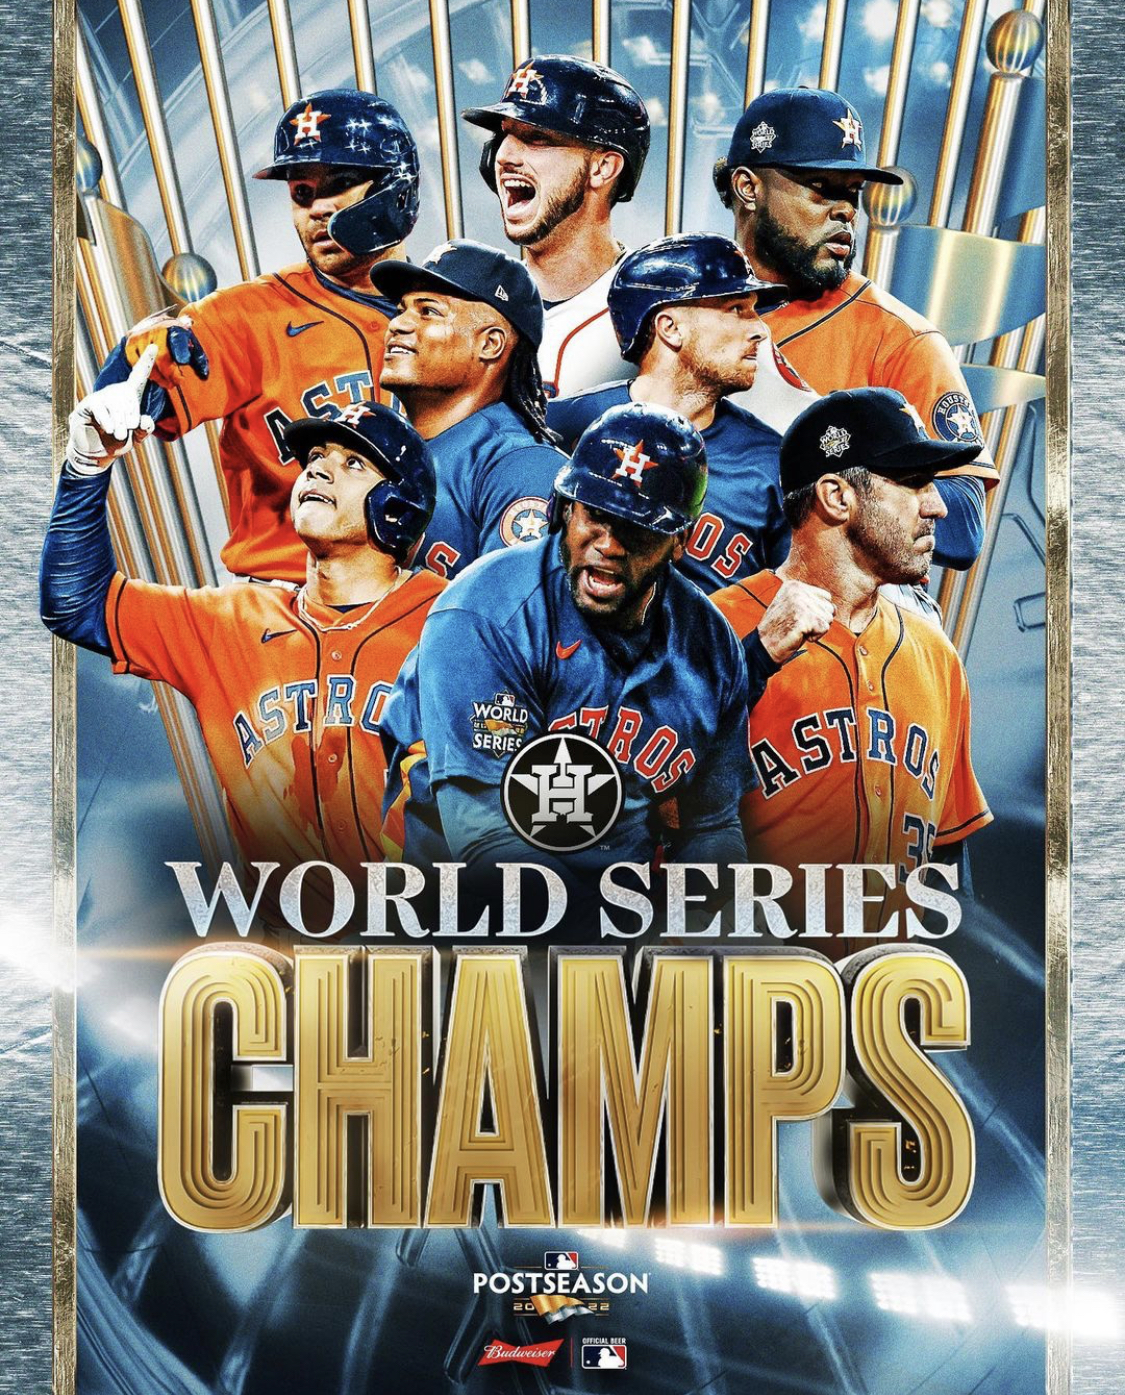 Astros' World Series run immortalized in team documentary